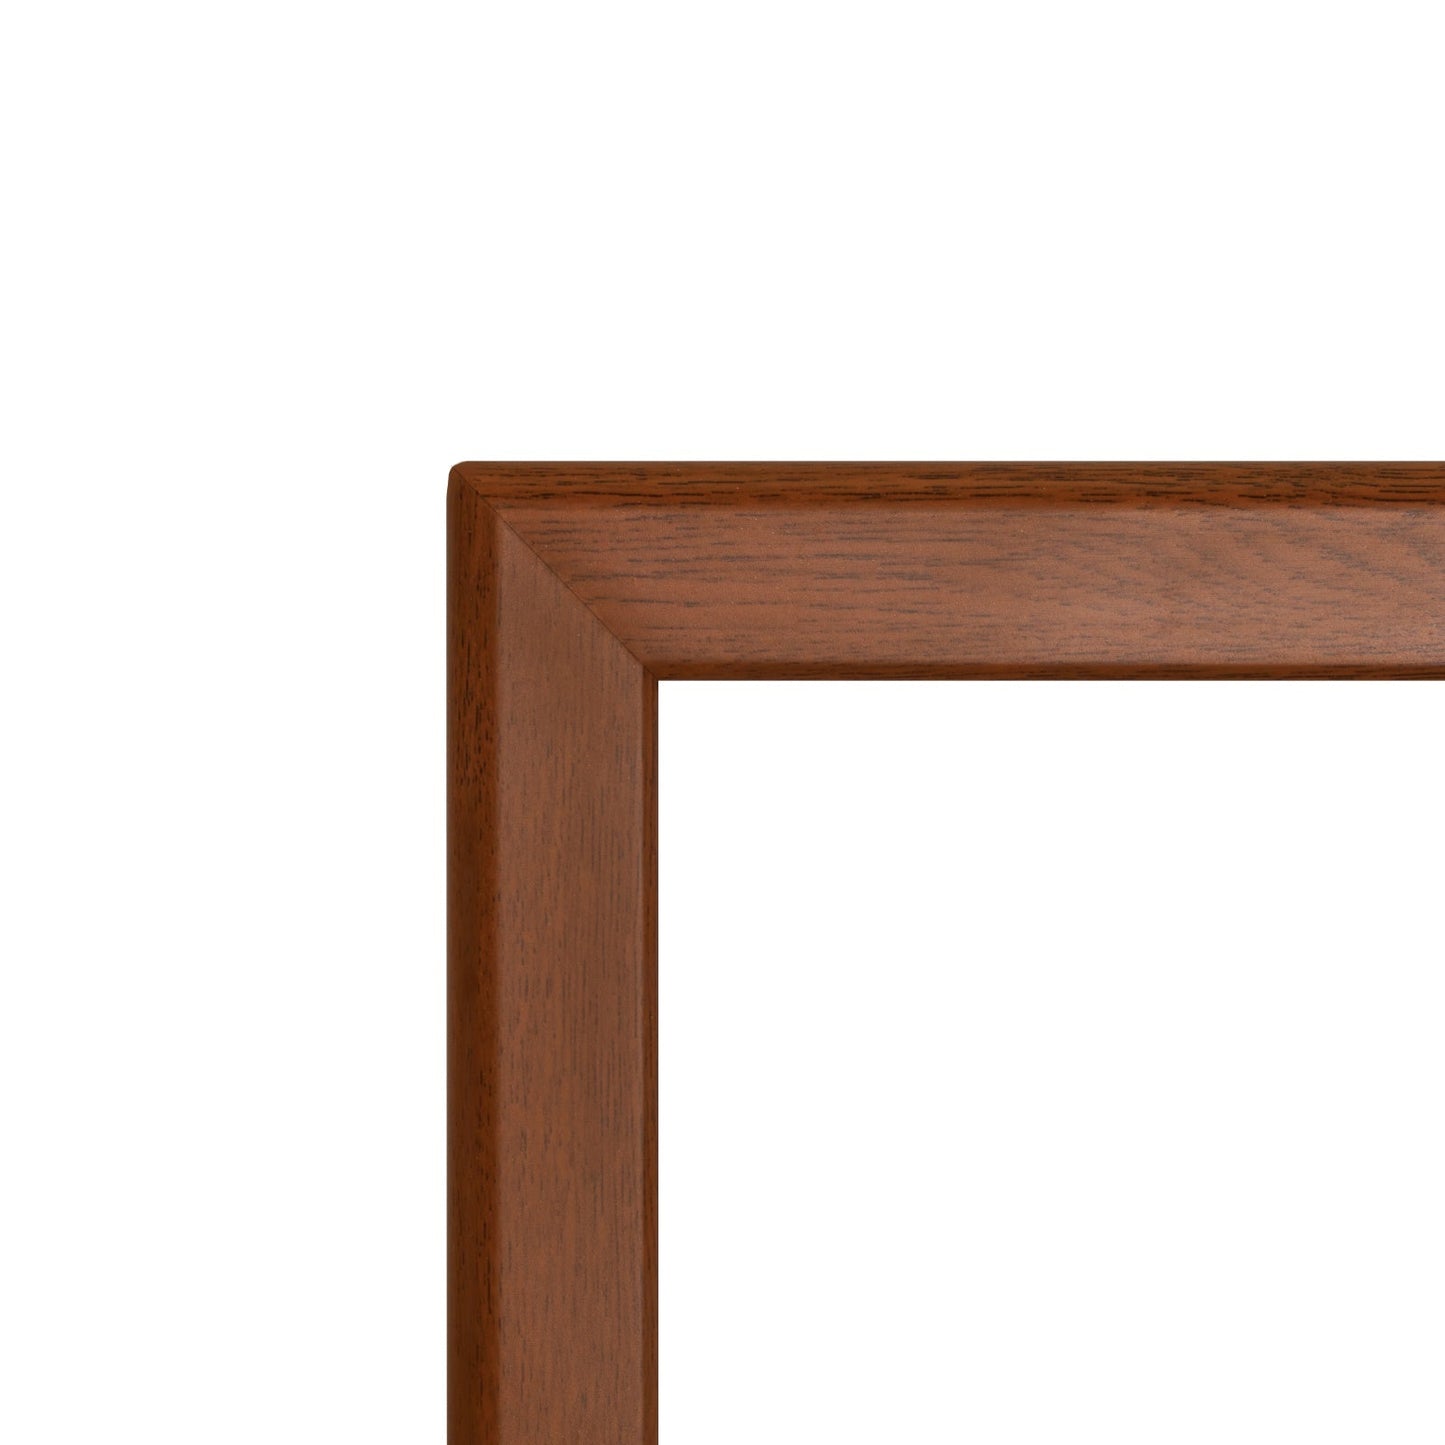 30x40 Dark Wood SnapeZo® Snap Frame - 1.25" Profile